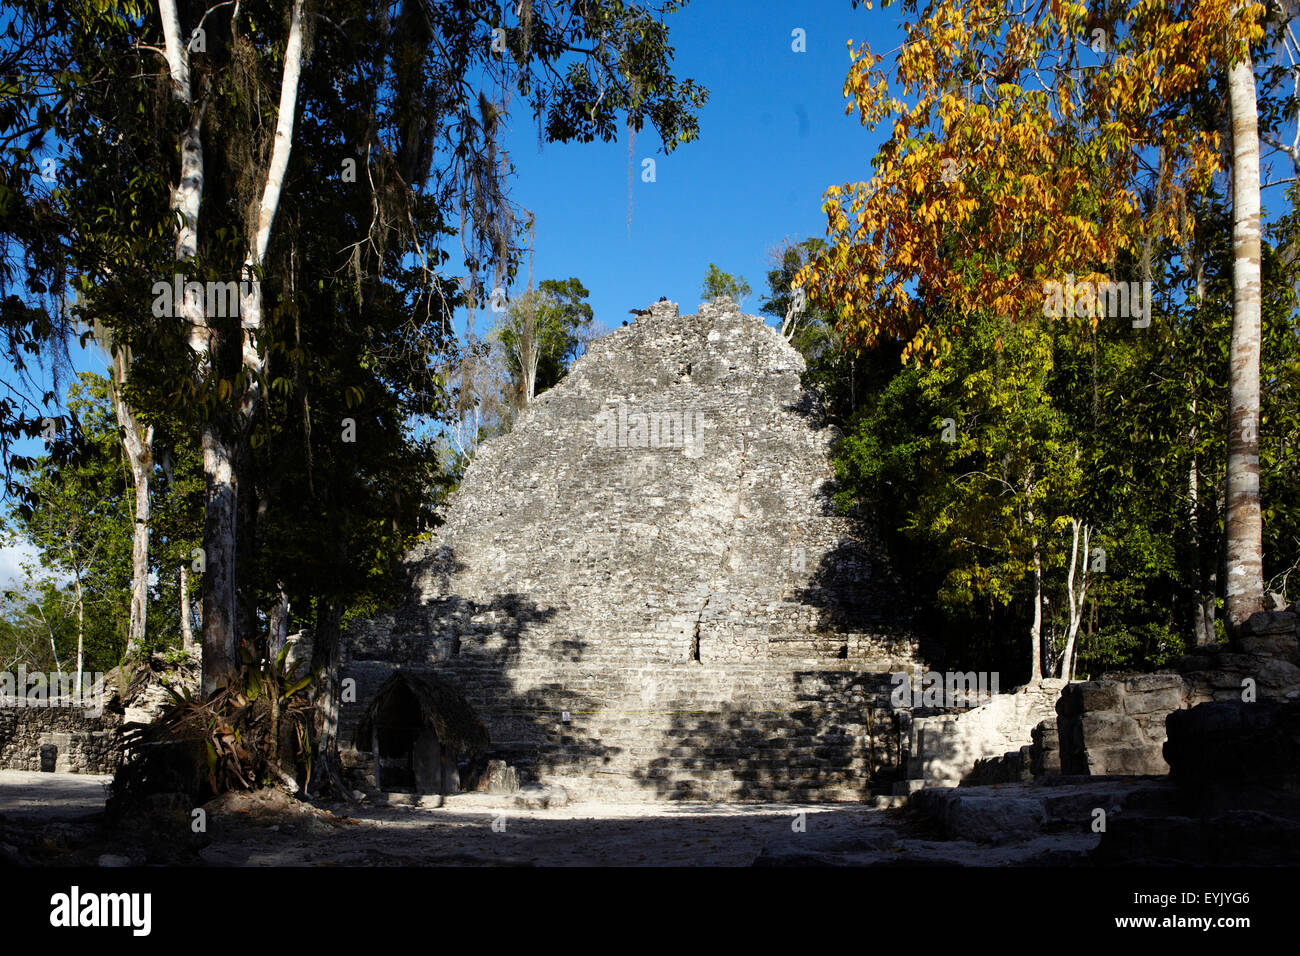 America, Mexico, Quintana Roo state, arqueological site of Coban. Stock Photo